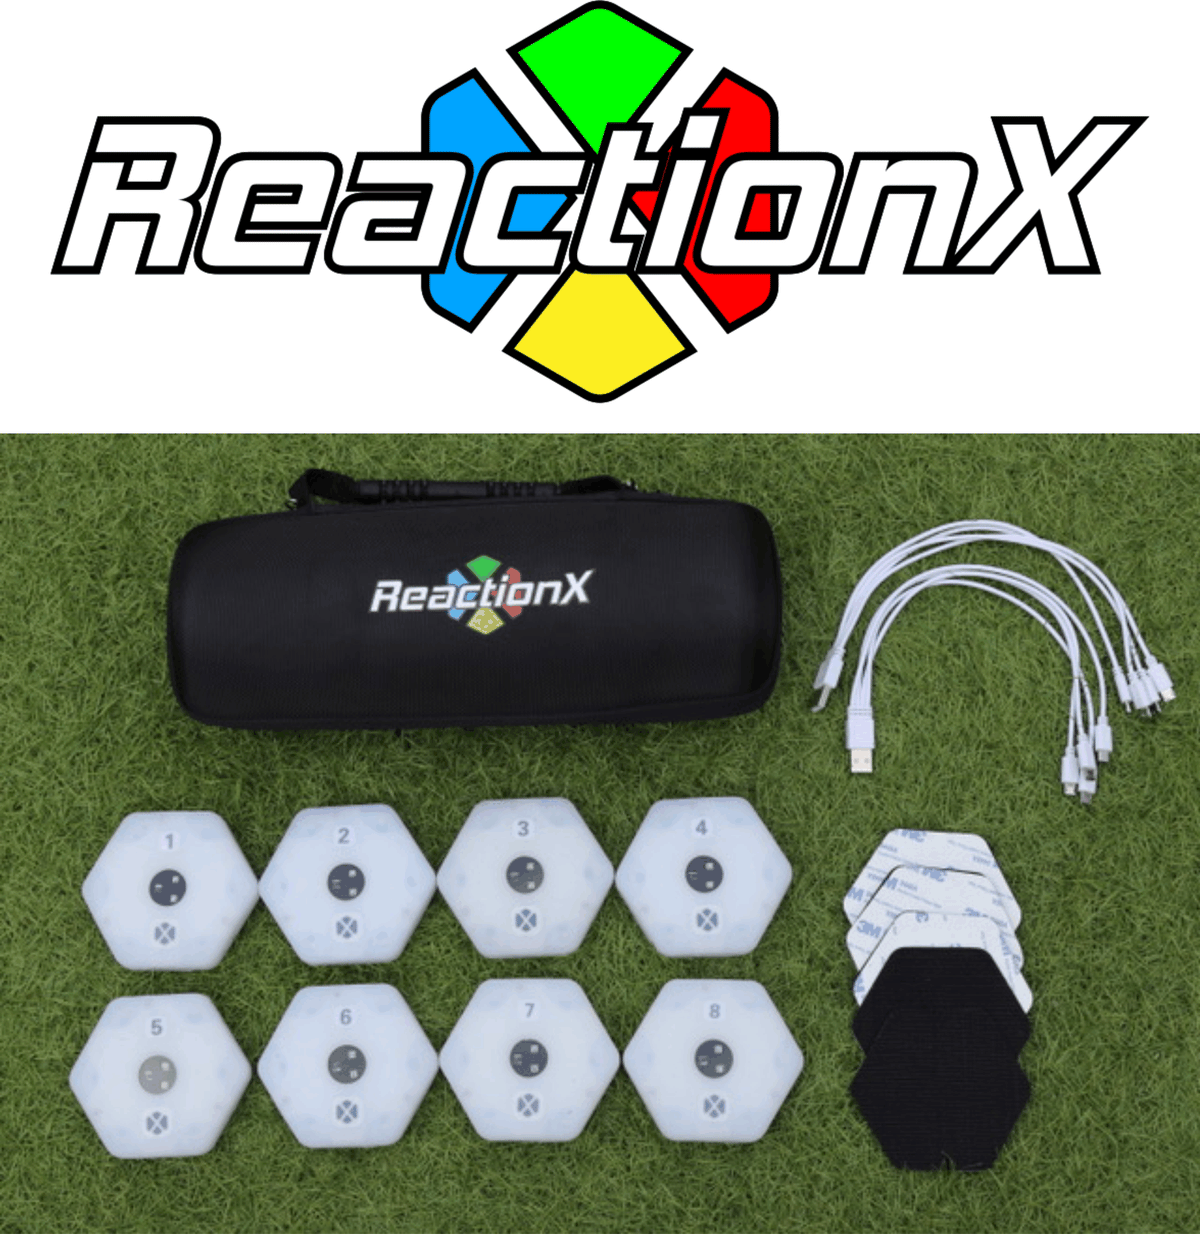 Reaction X - Speed, Agility, Response Training Lamp. Set of 8.